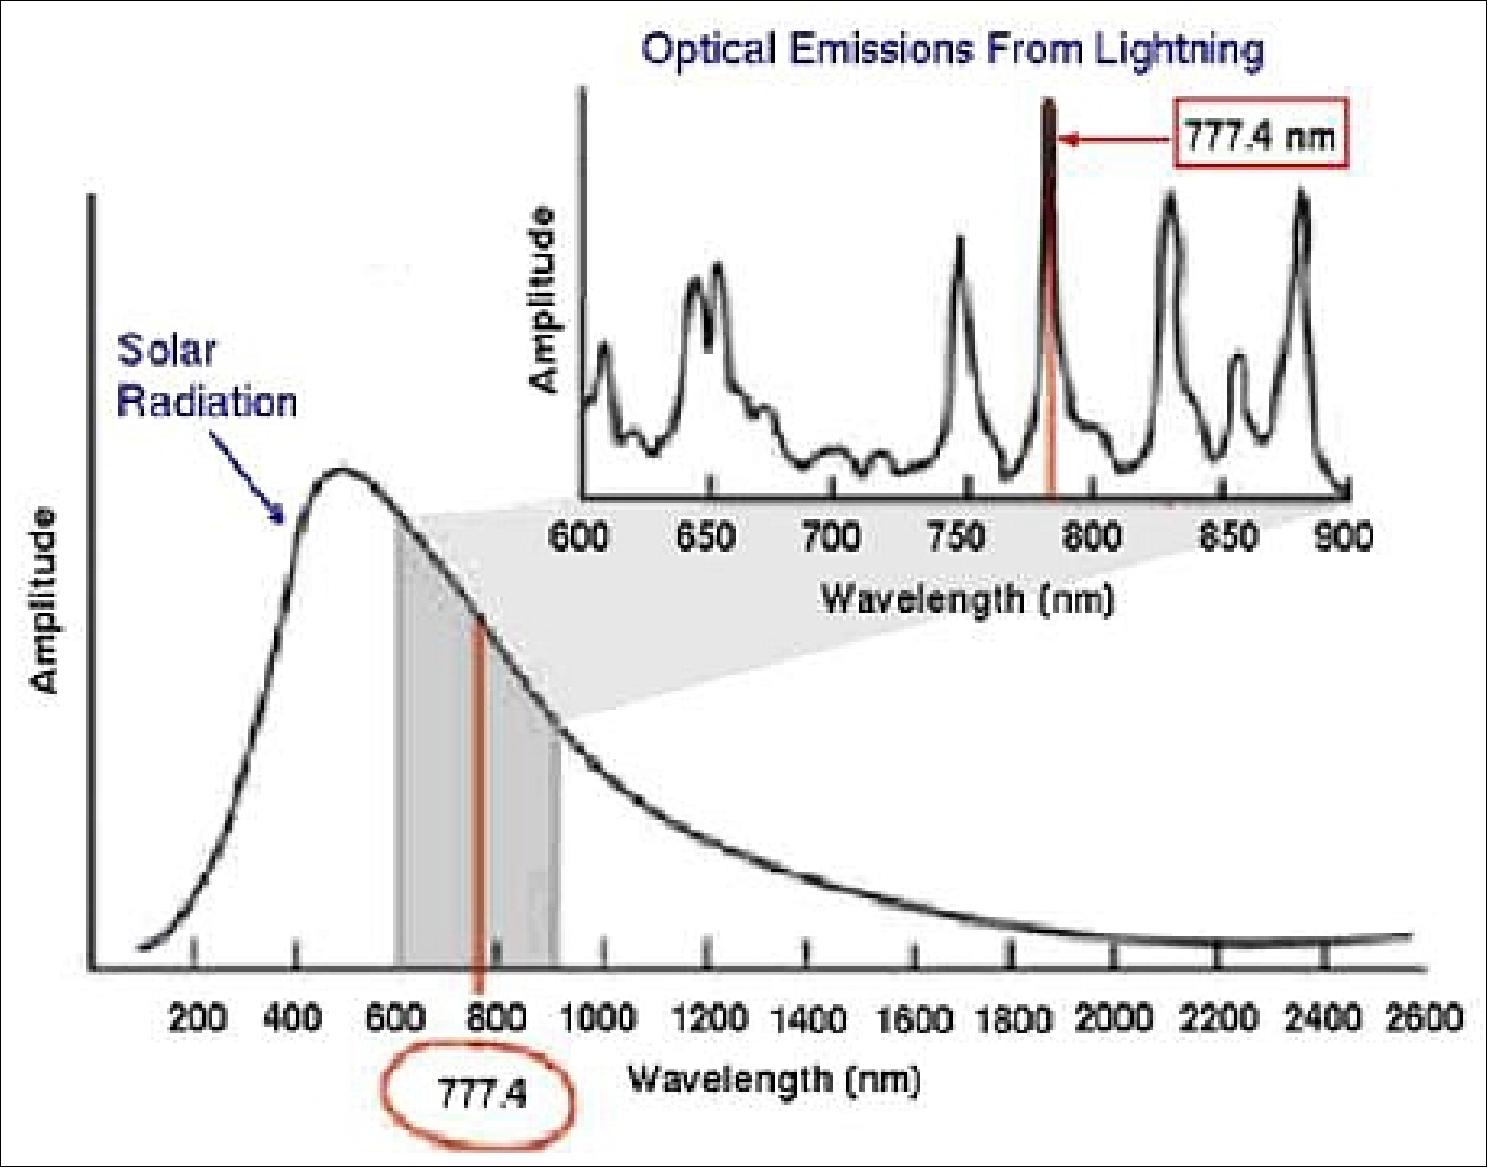 Figure 33: Optical emission from lightning (image credit: Selex Galileo)